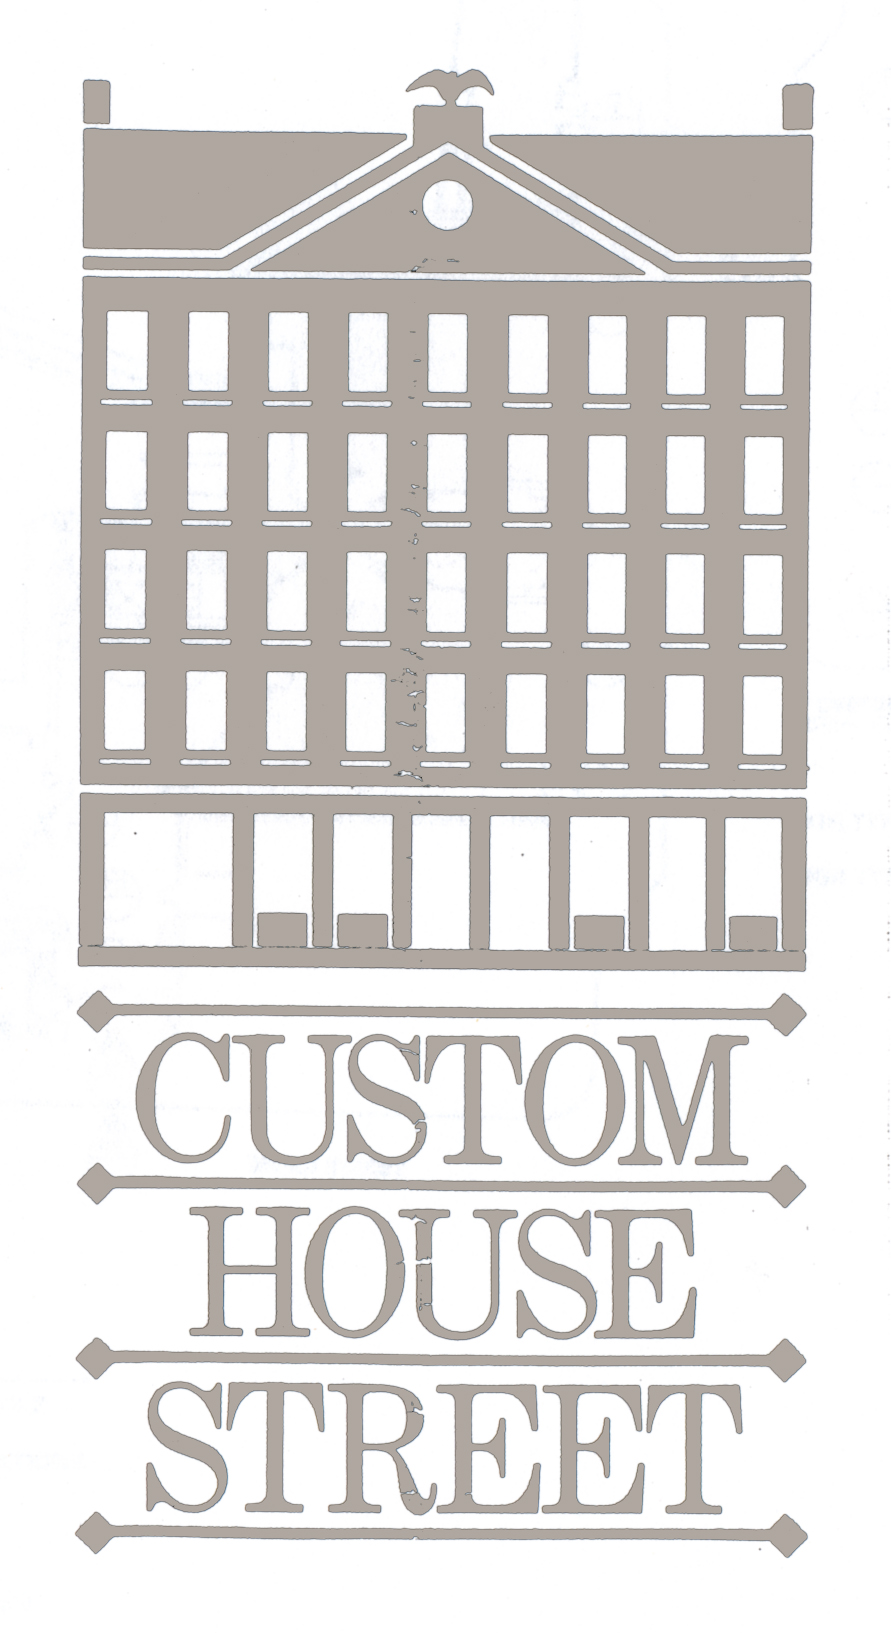 Custom House development logo, featuring the outline of the original 1810 Boston Customs House.